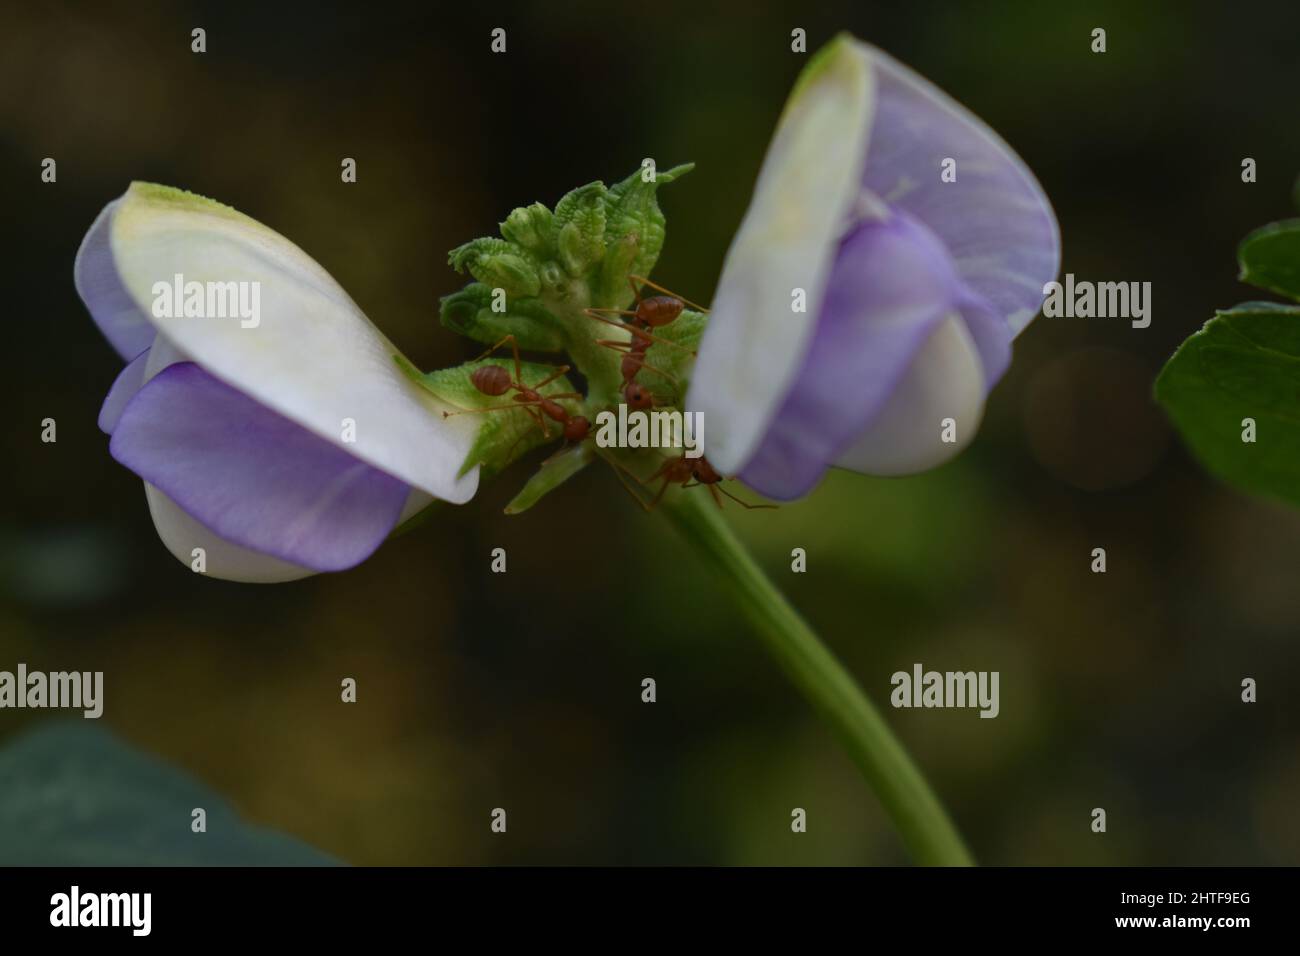 Closeup shot of Lathyrus laxiflorus flower in a blurred backgrounf Stock Photo